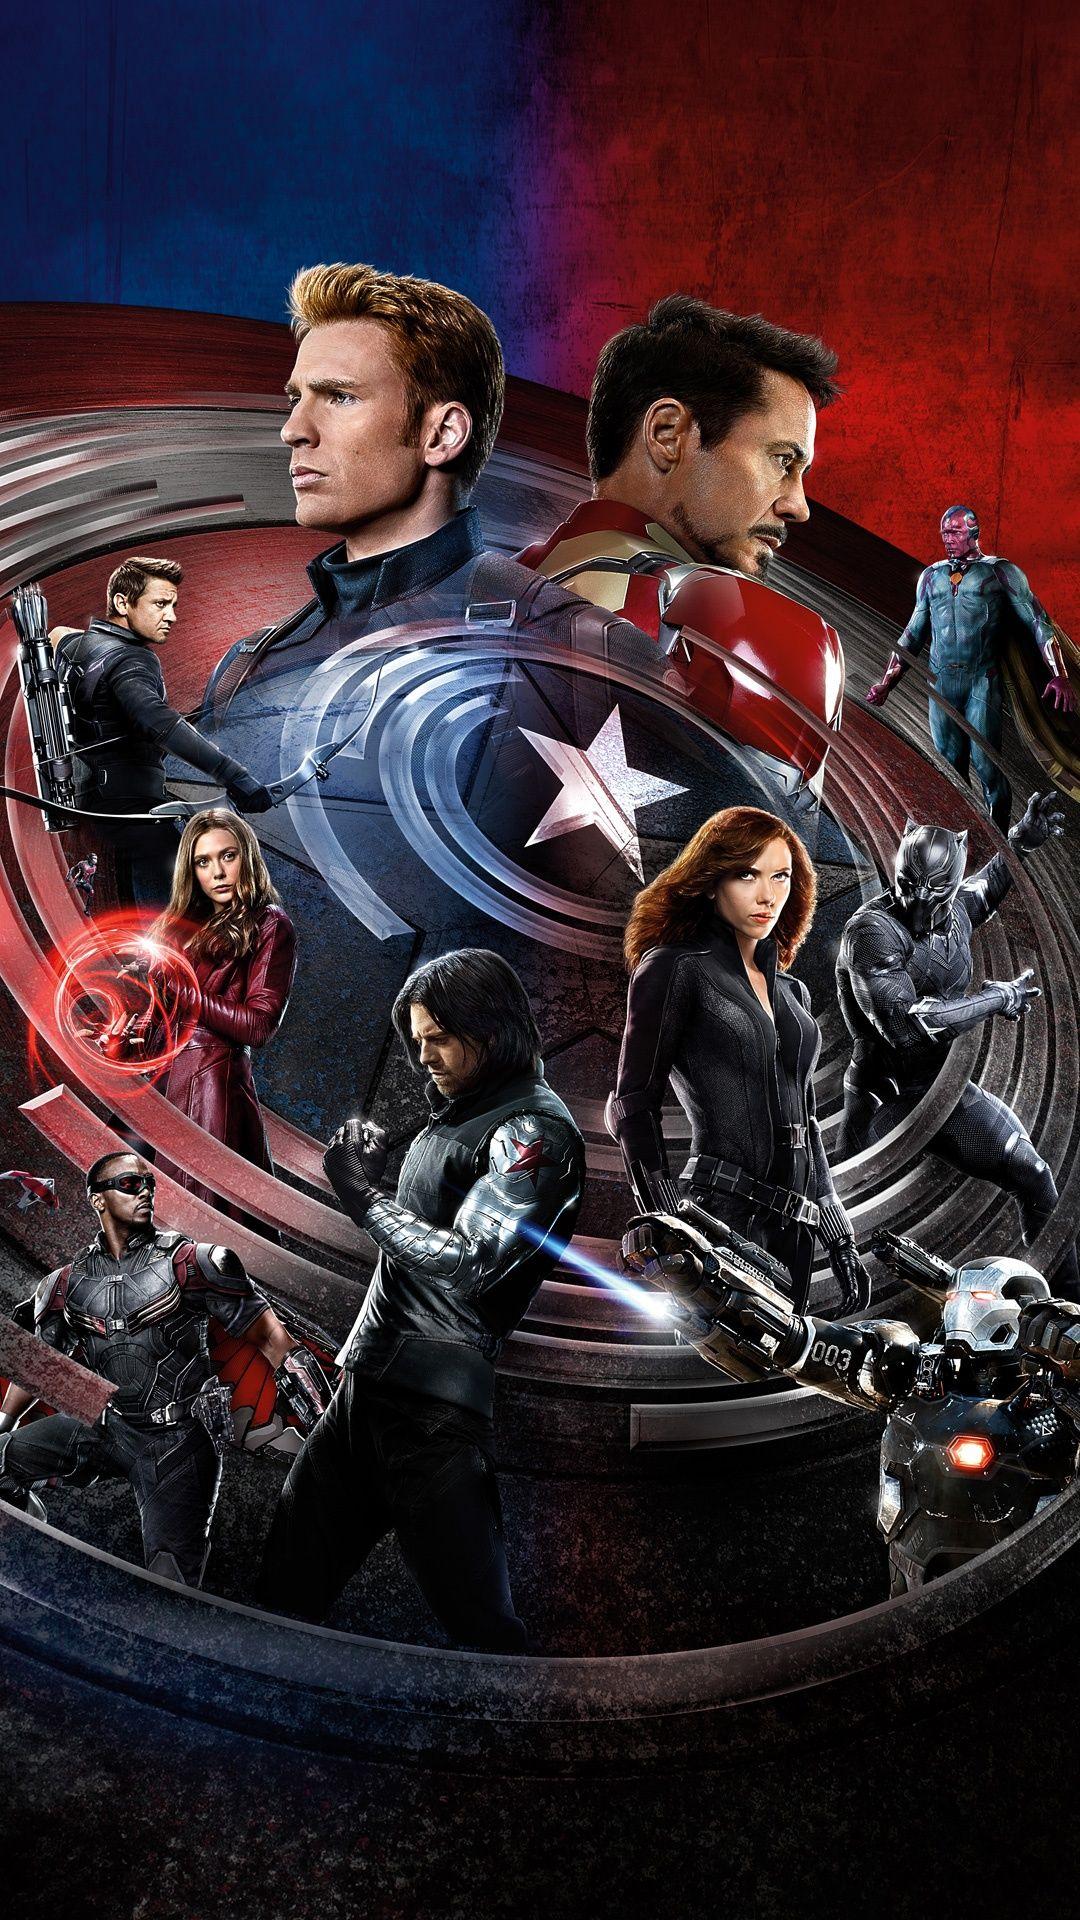 Civil War Captain America Iron Man Wallpaper in jpg format for free